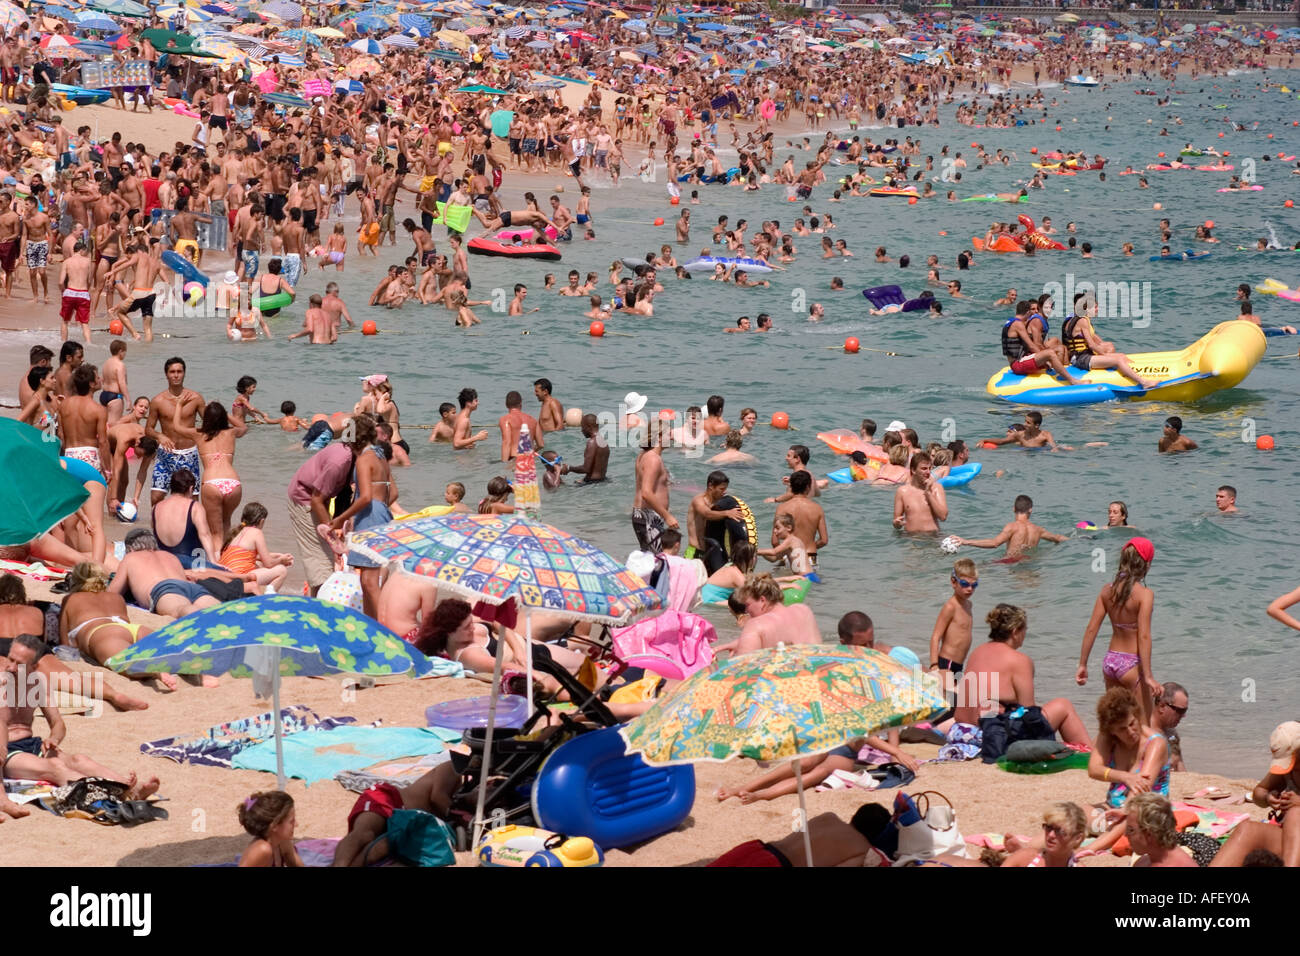 Mass tourism at the Spanish coast in Lloret de Mar Stock Photo - Alamy